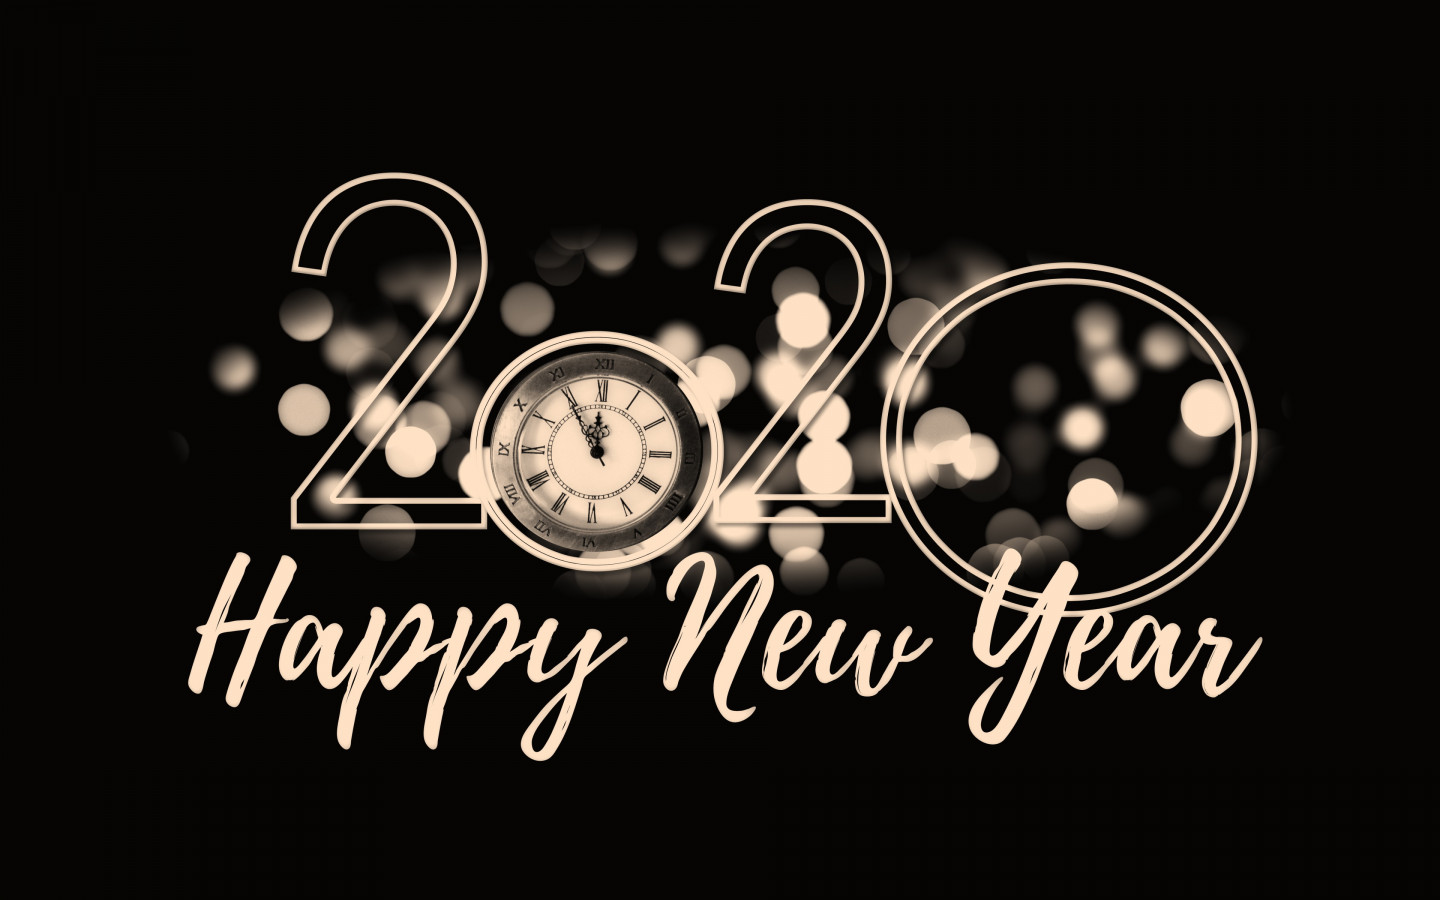 2020 Happy New Year wallpaper 1440x900